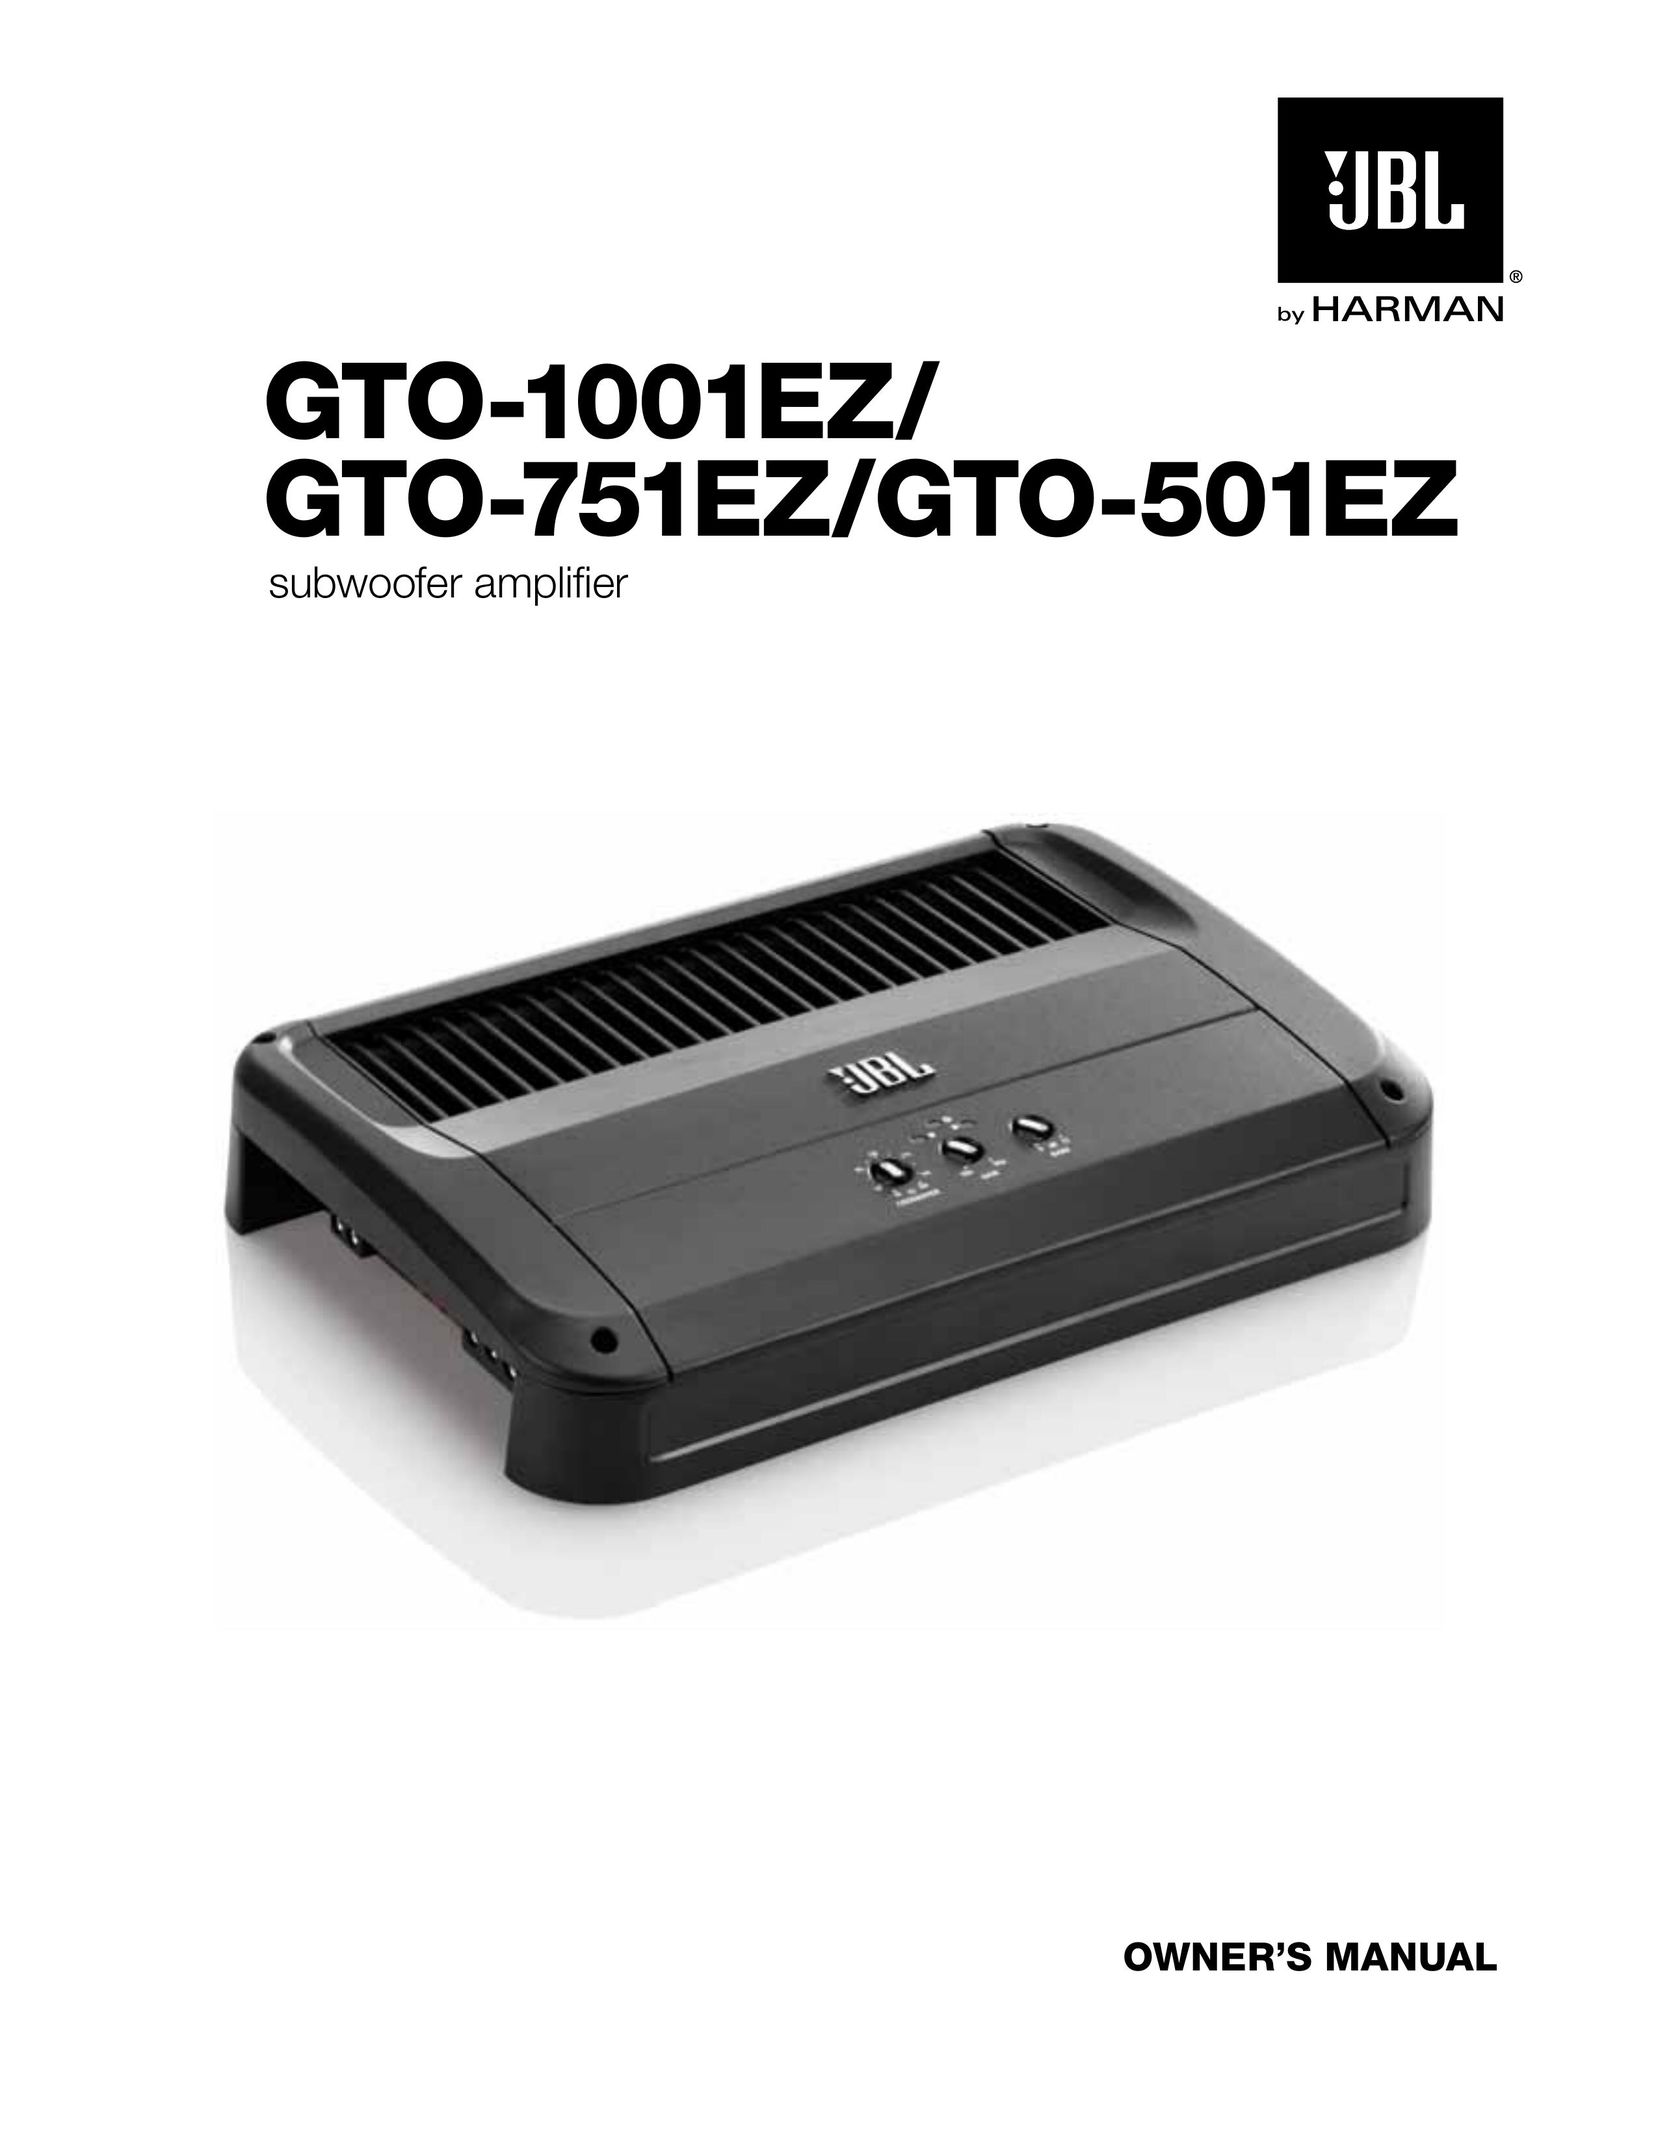 JBL GTO-501EZ Stereo Amplifier User Manual